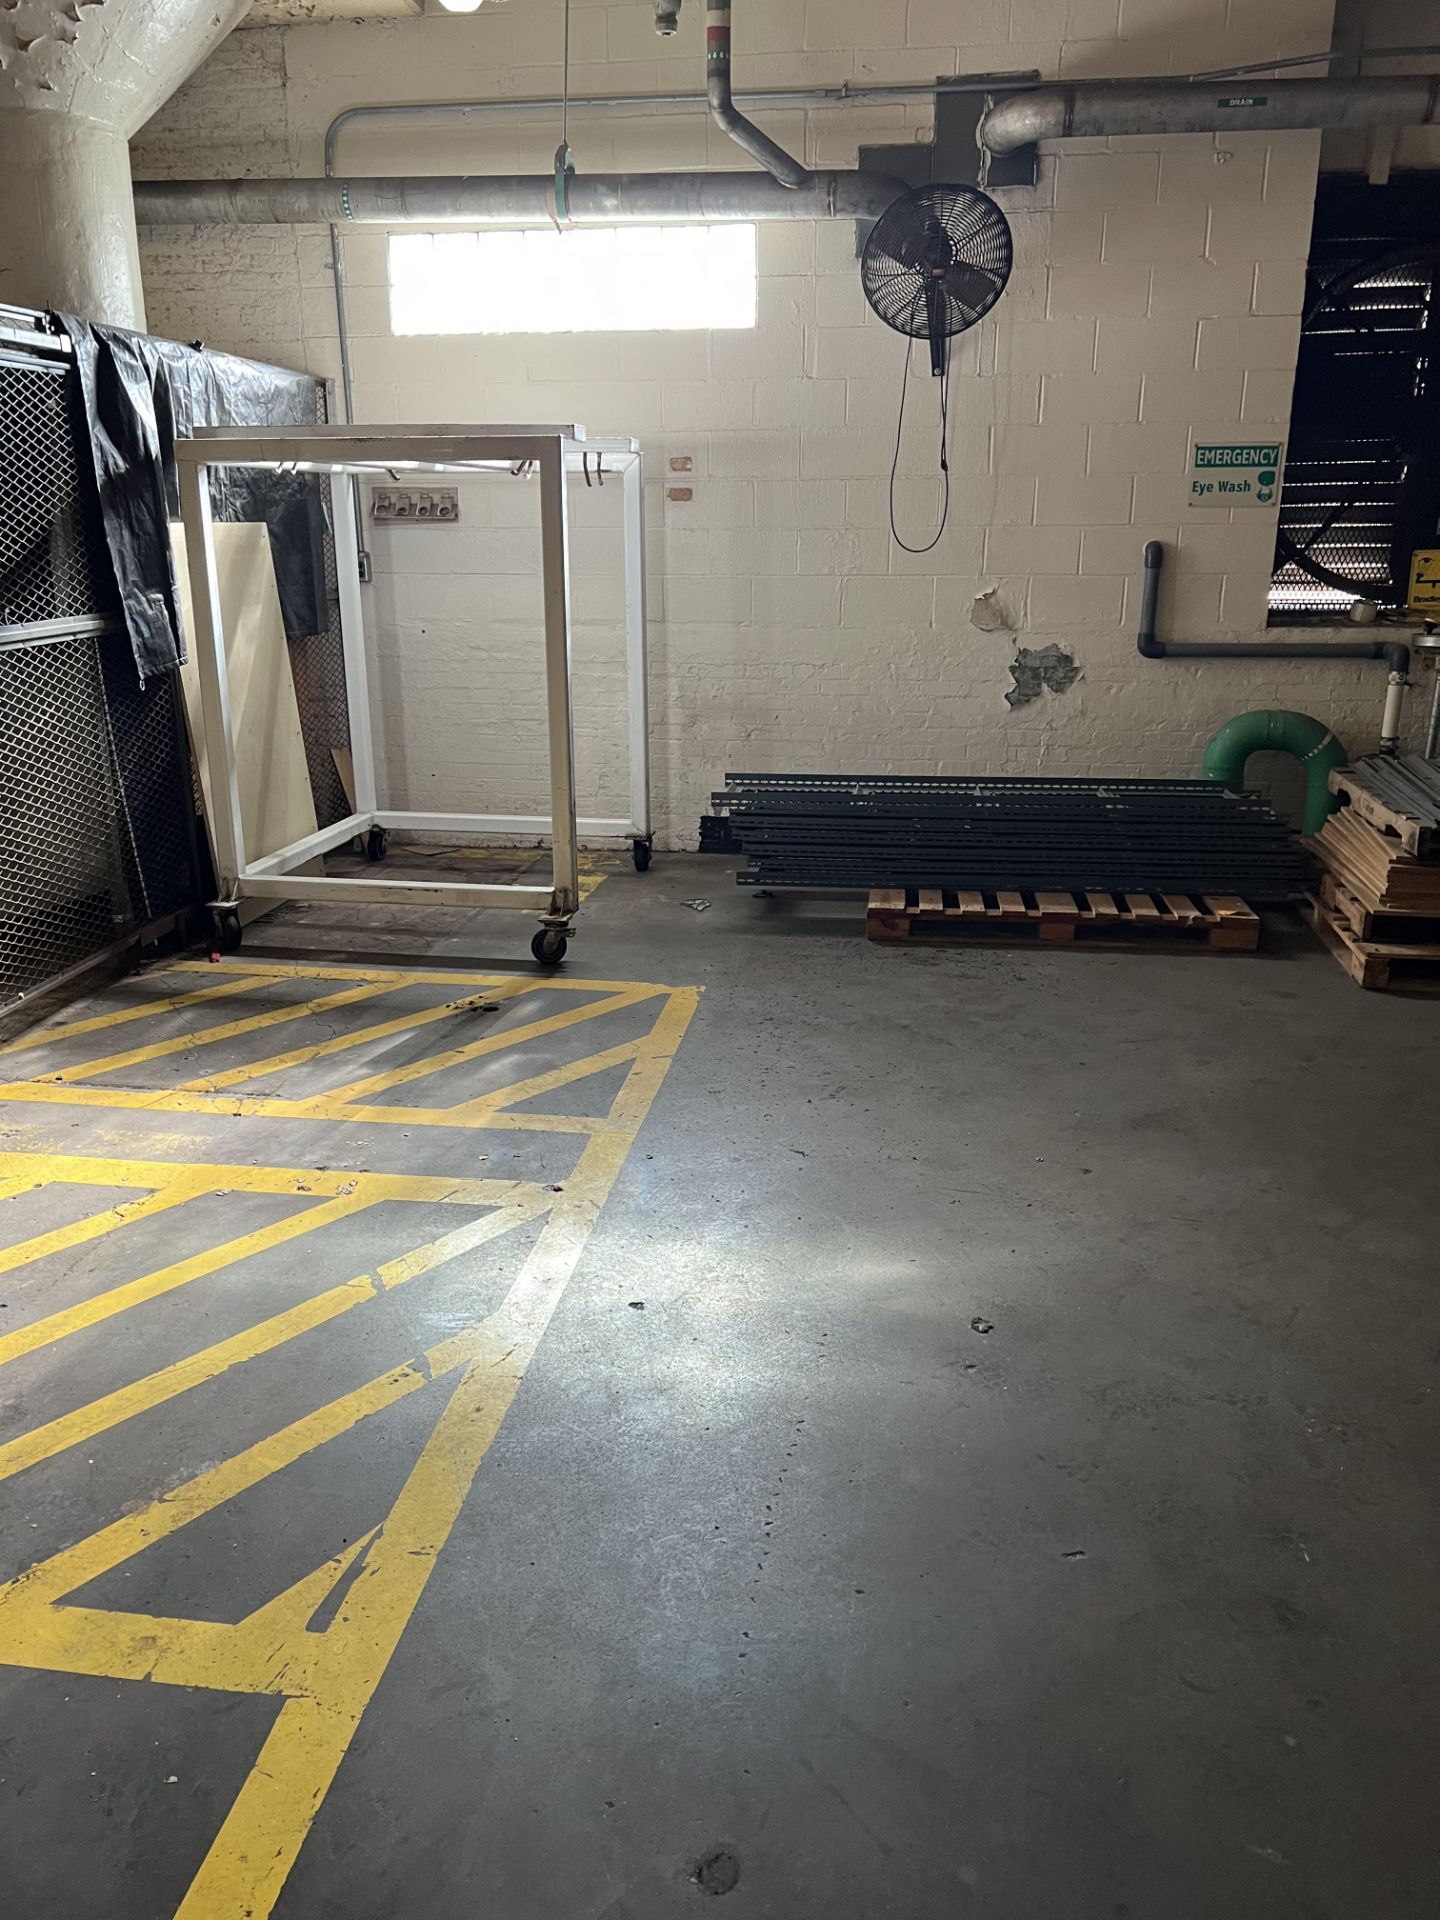 [Lot] Miscellaneous shelving, dock carts, frames